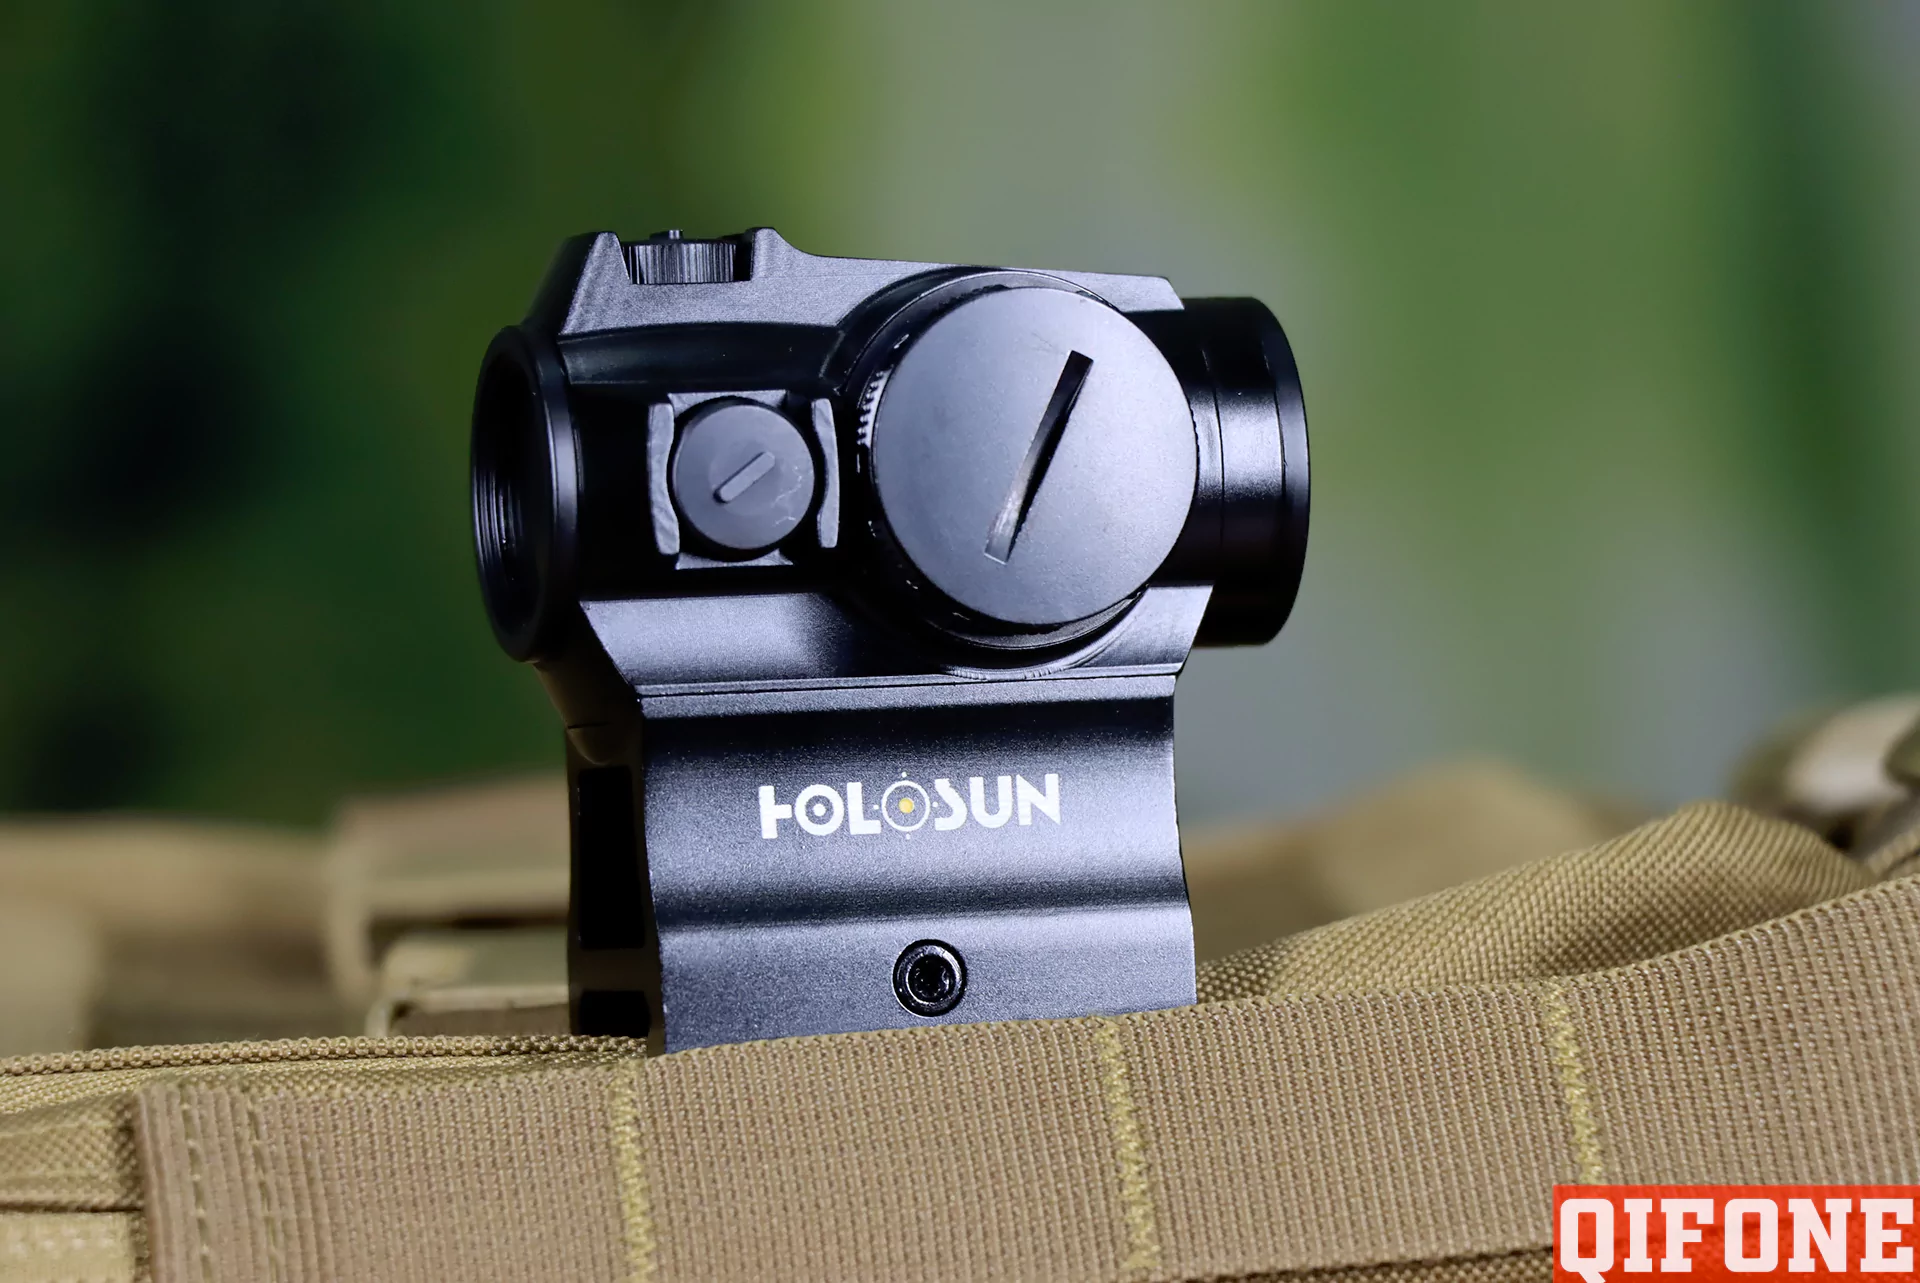 HOLOSUN HE503R-GD 红点瞄准镜 高抗震